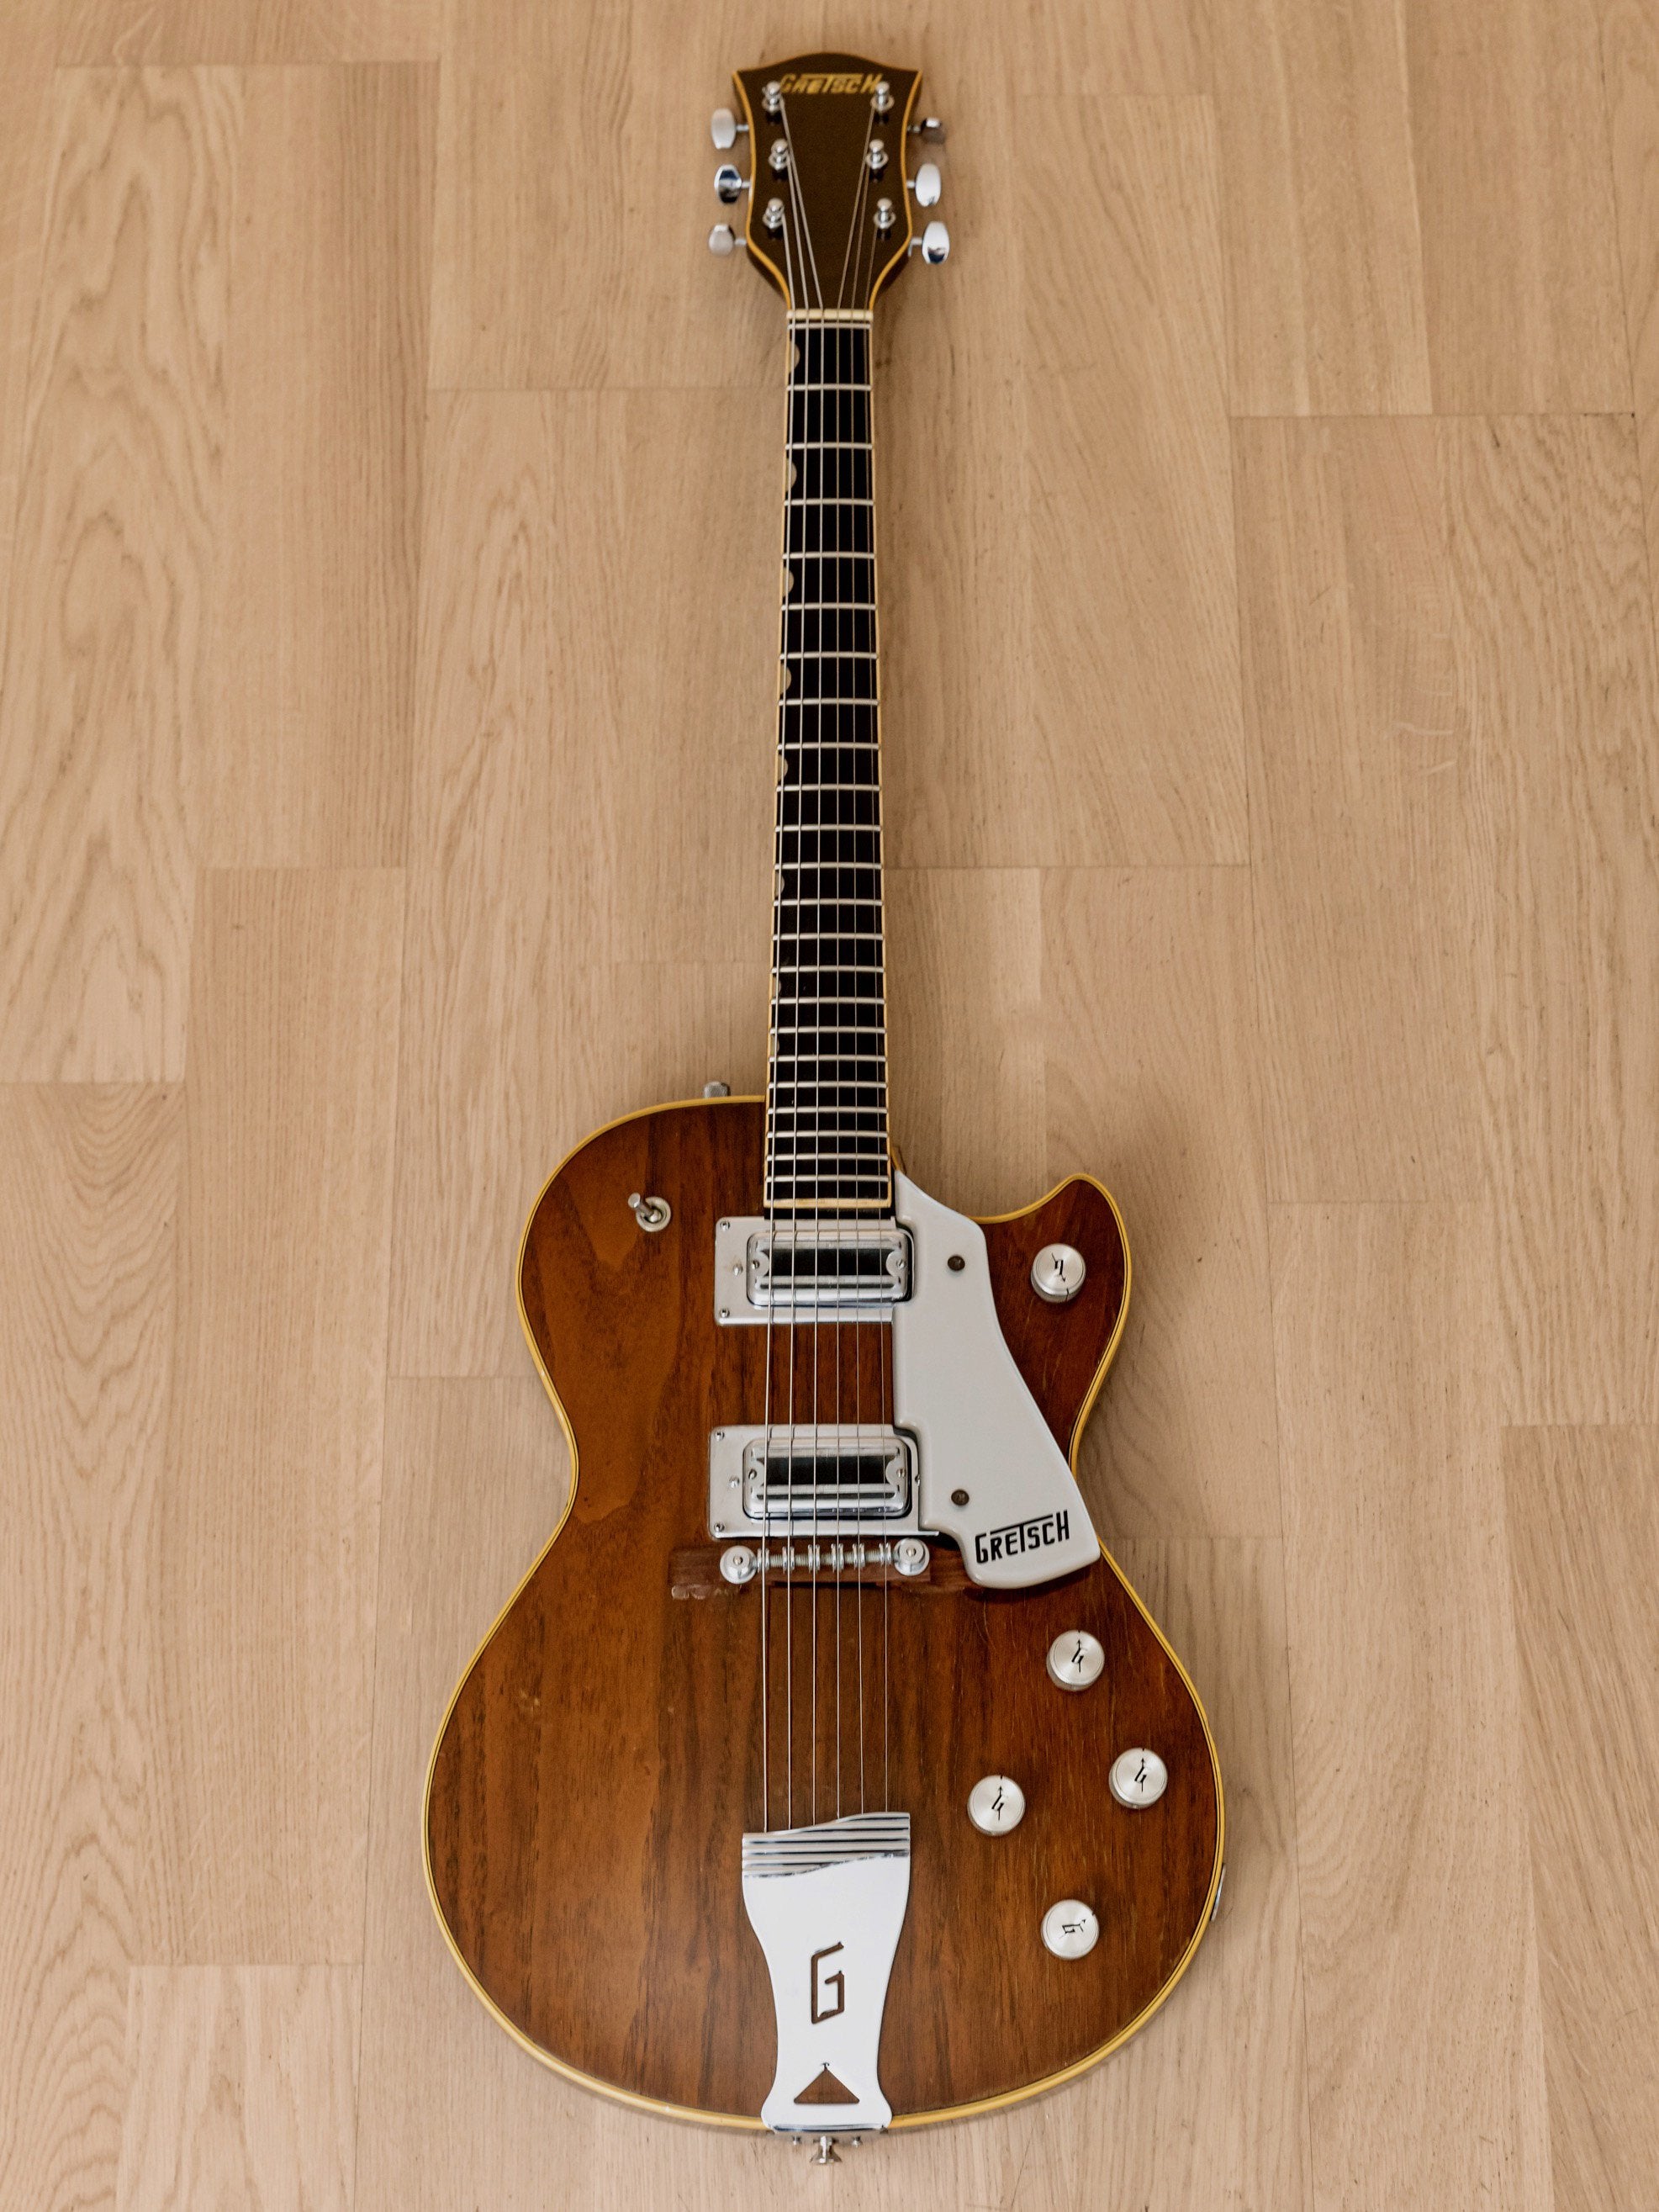 1975 Gretsch Roc Jet 7613 Vintage Electric Guitar, Walnut w/ SuperTron Pickups